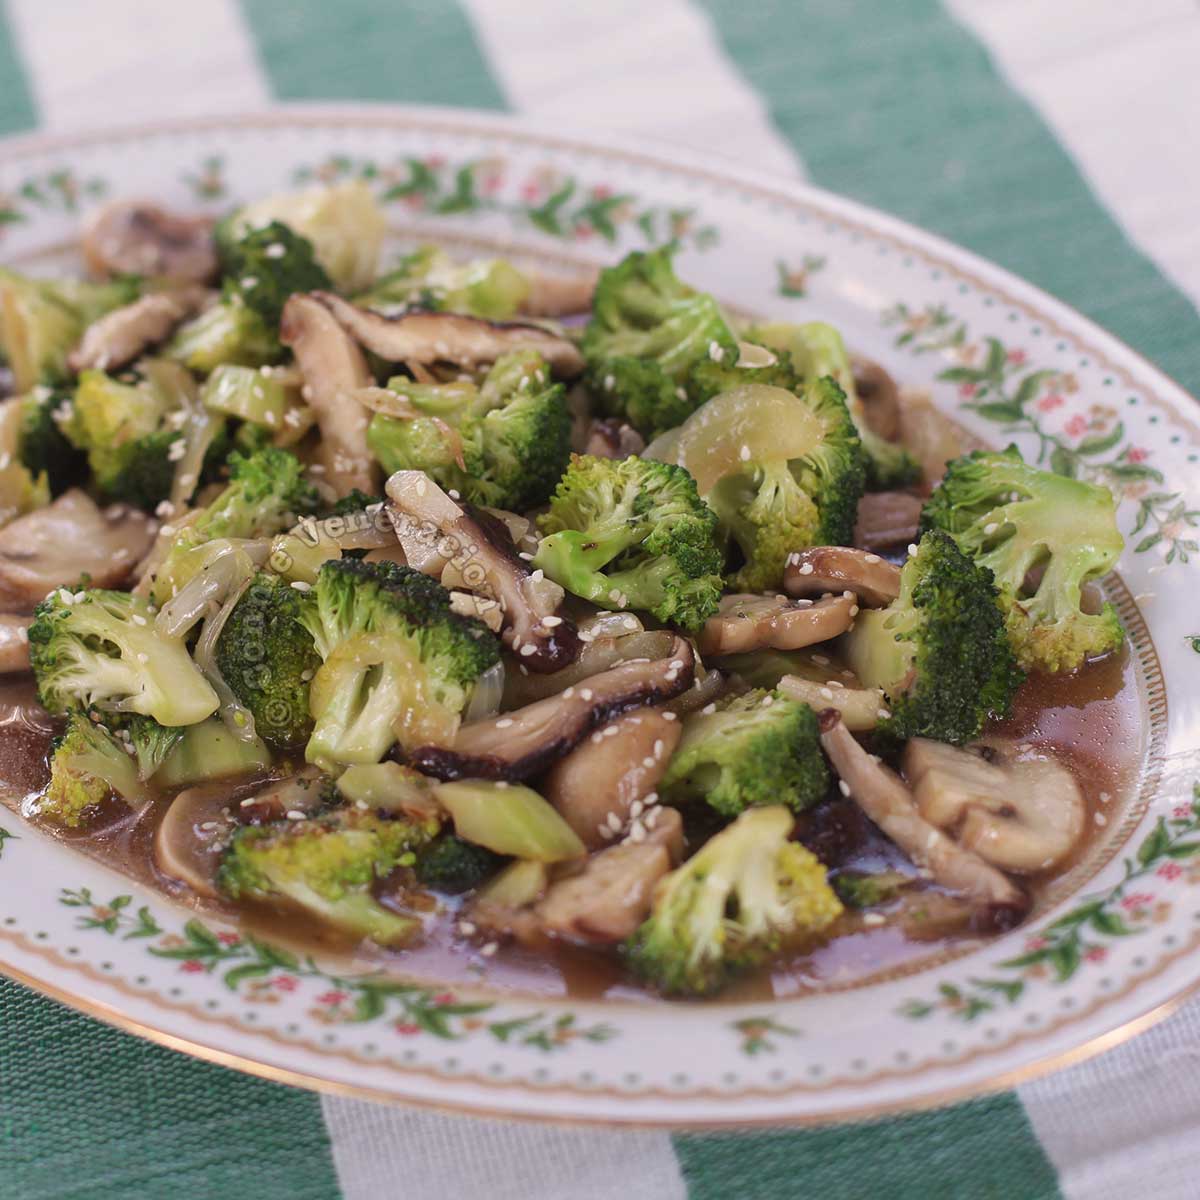 Mushroom broccoli stir fry